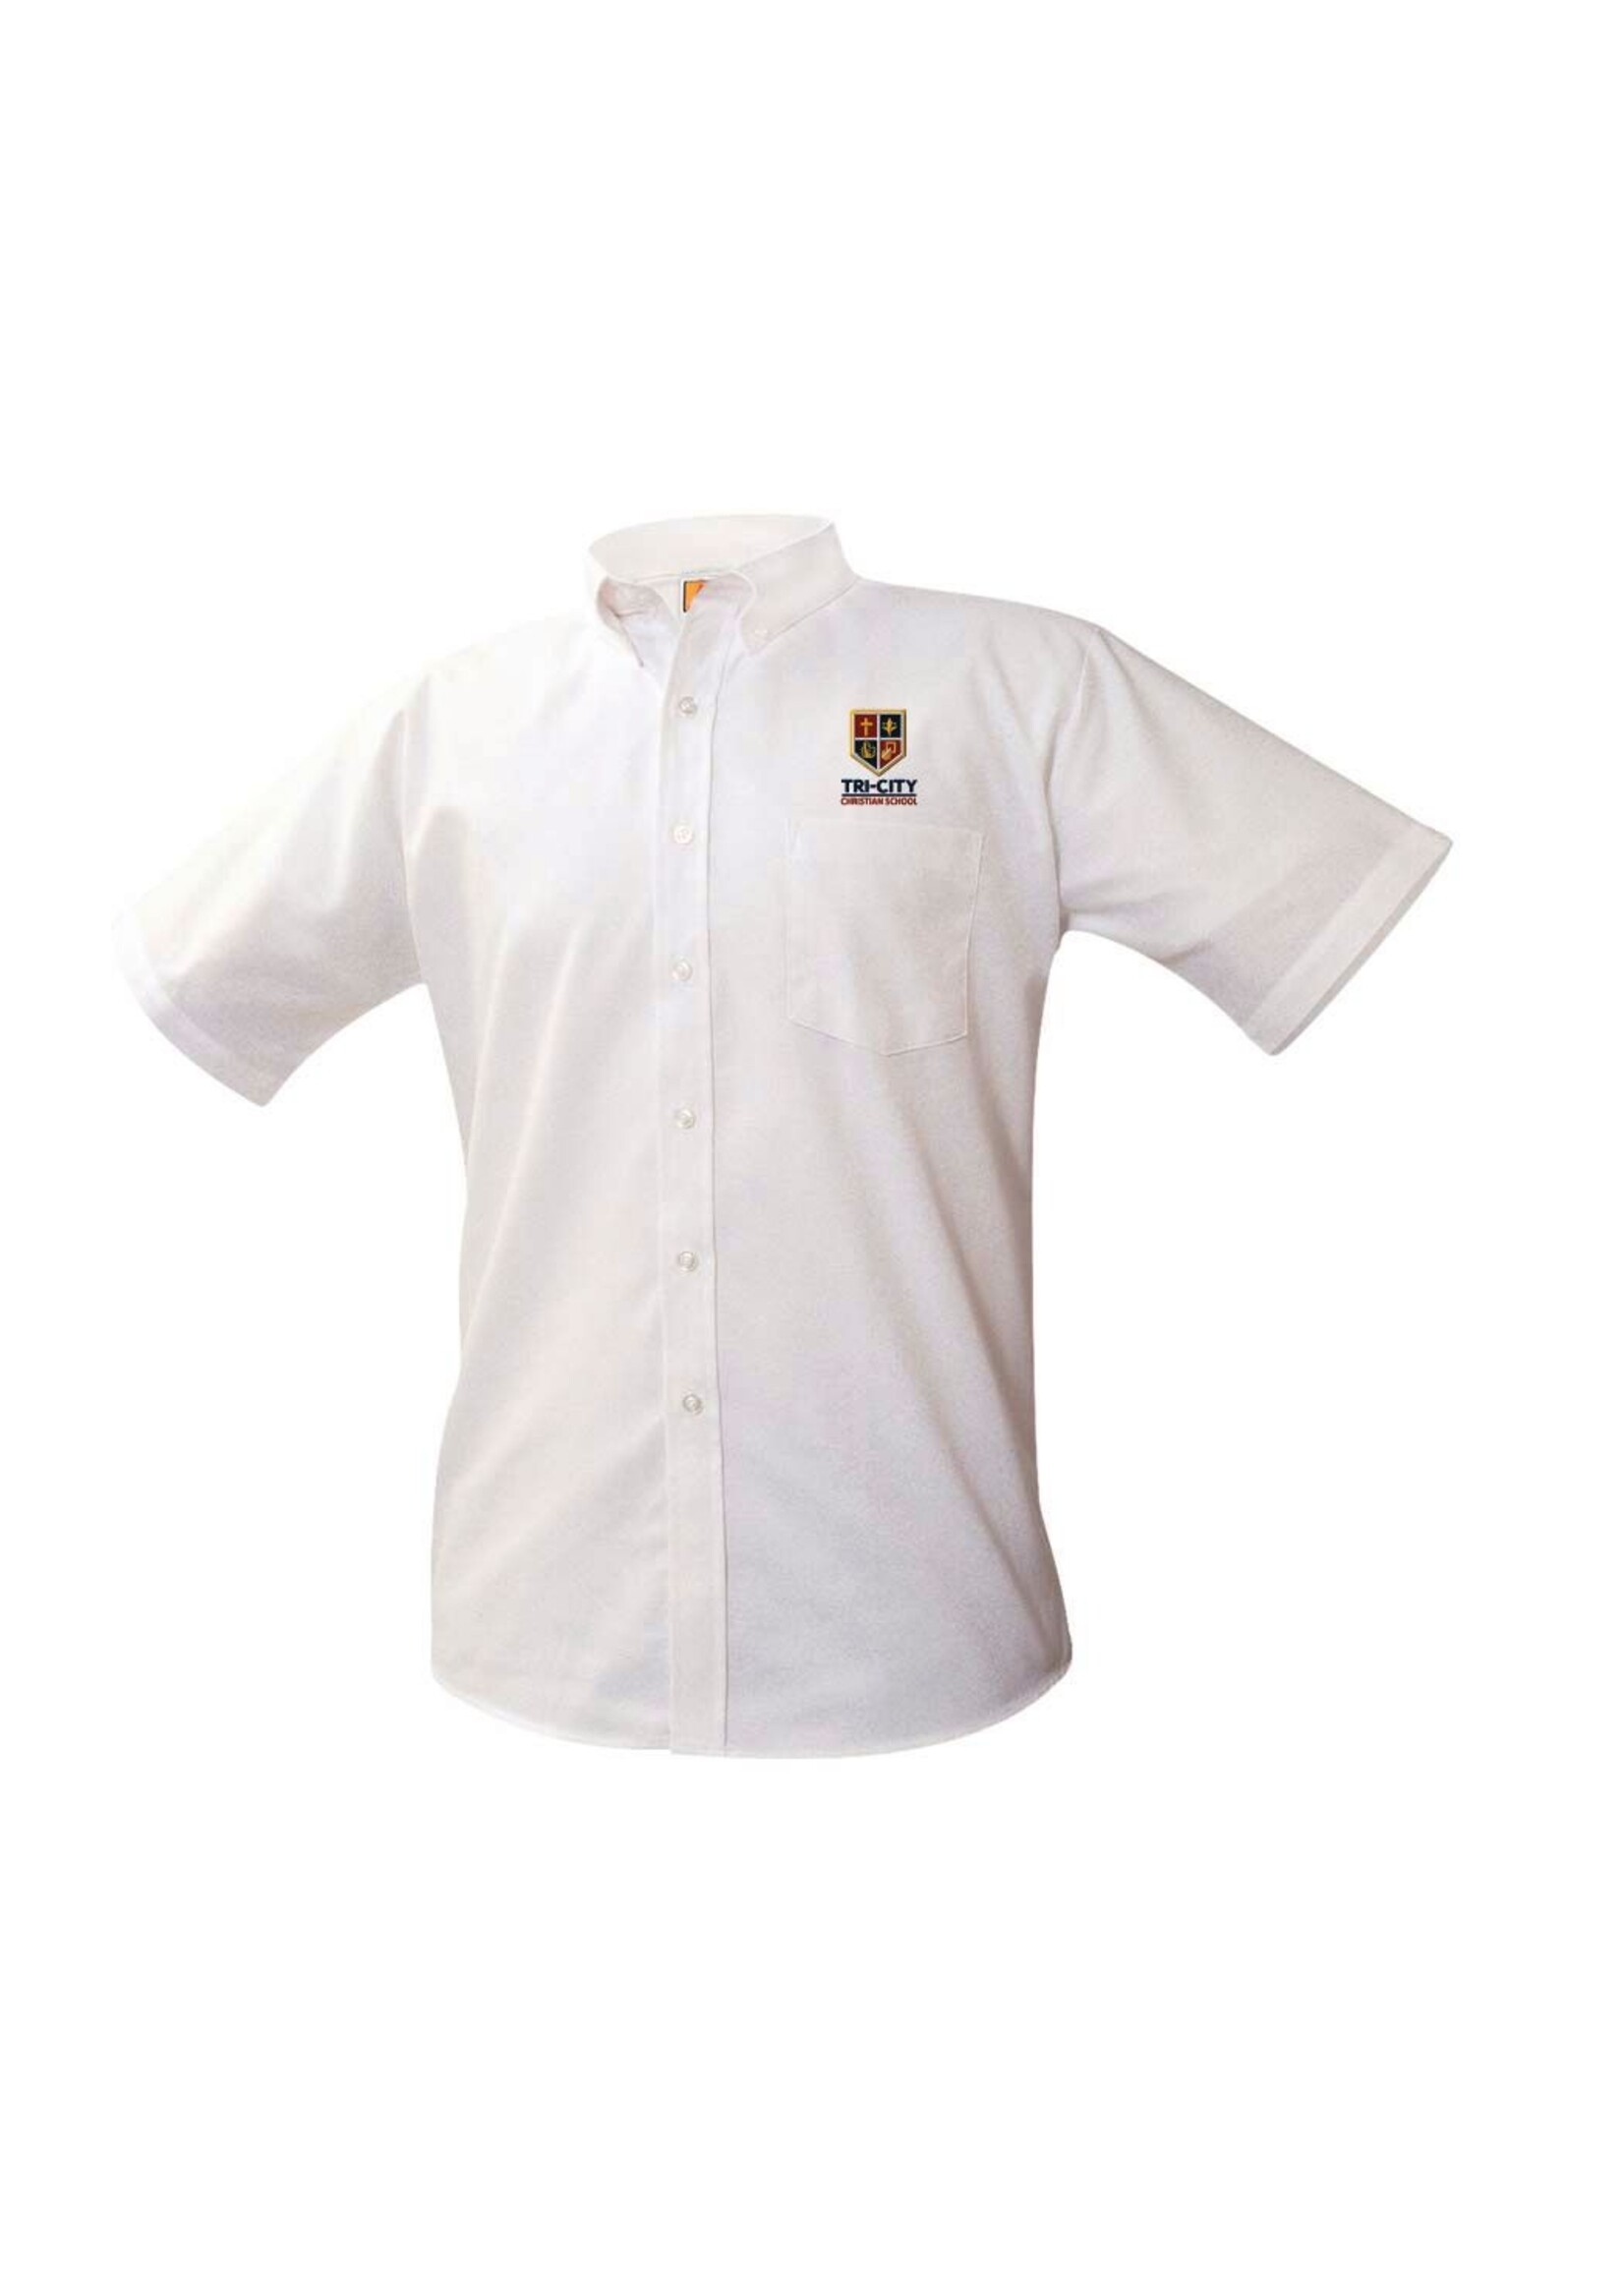 TCCS White Short Sleeve Oxford Shirt